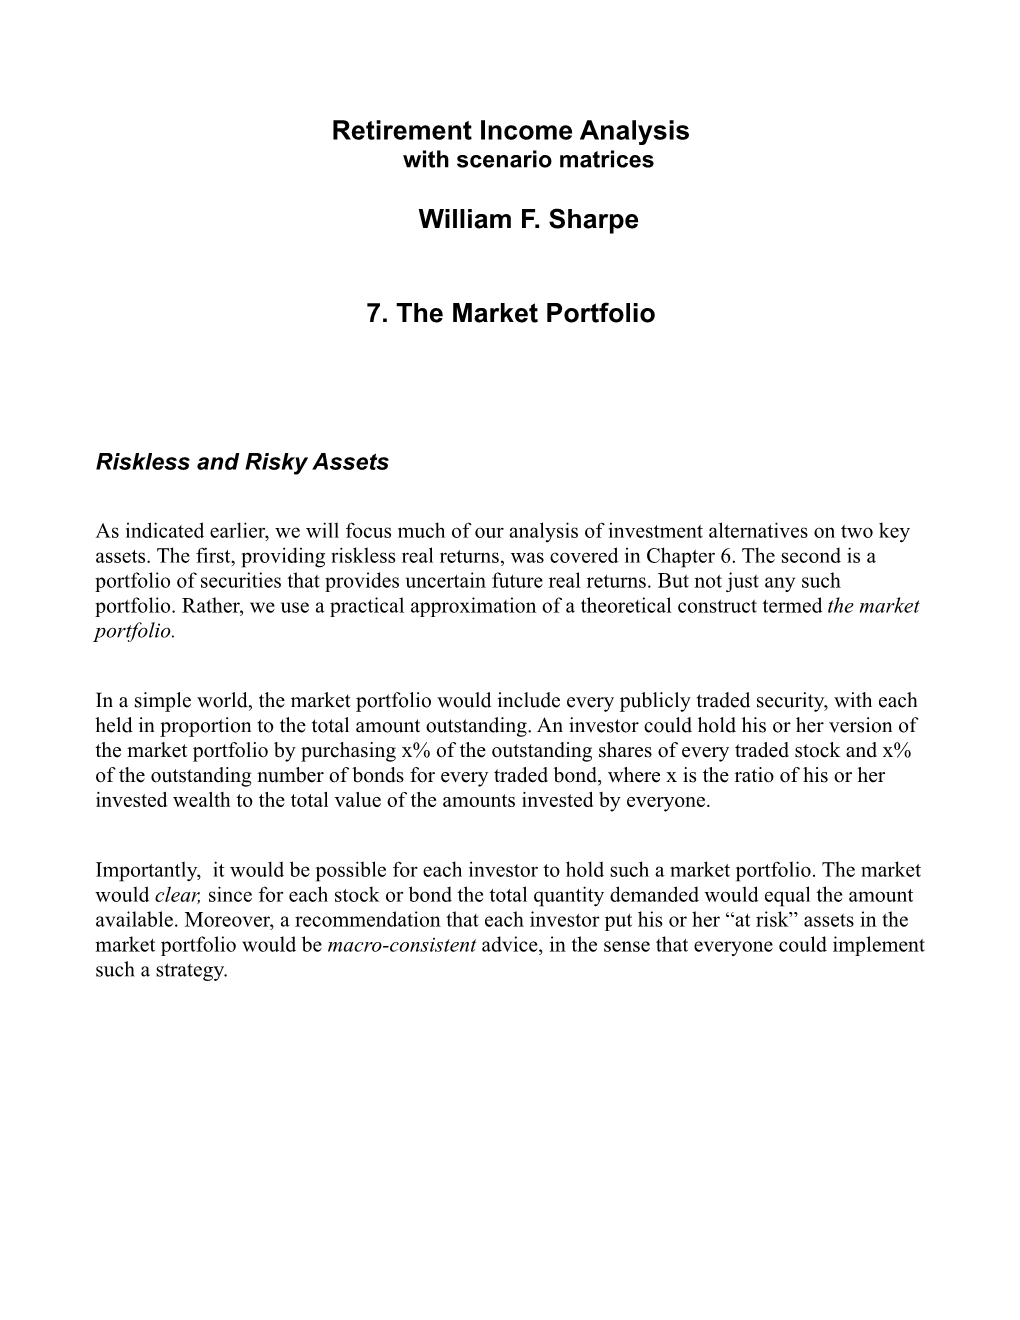 The Market Portfolio